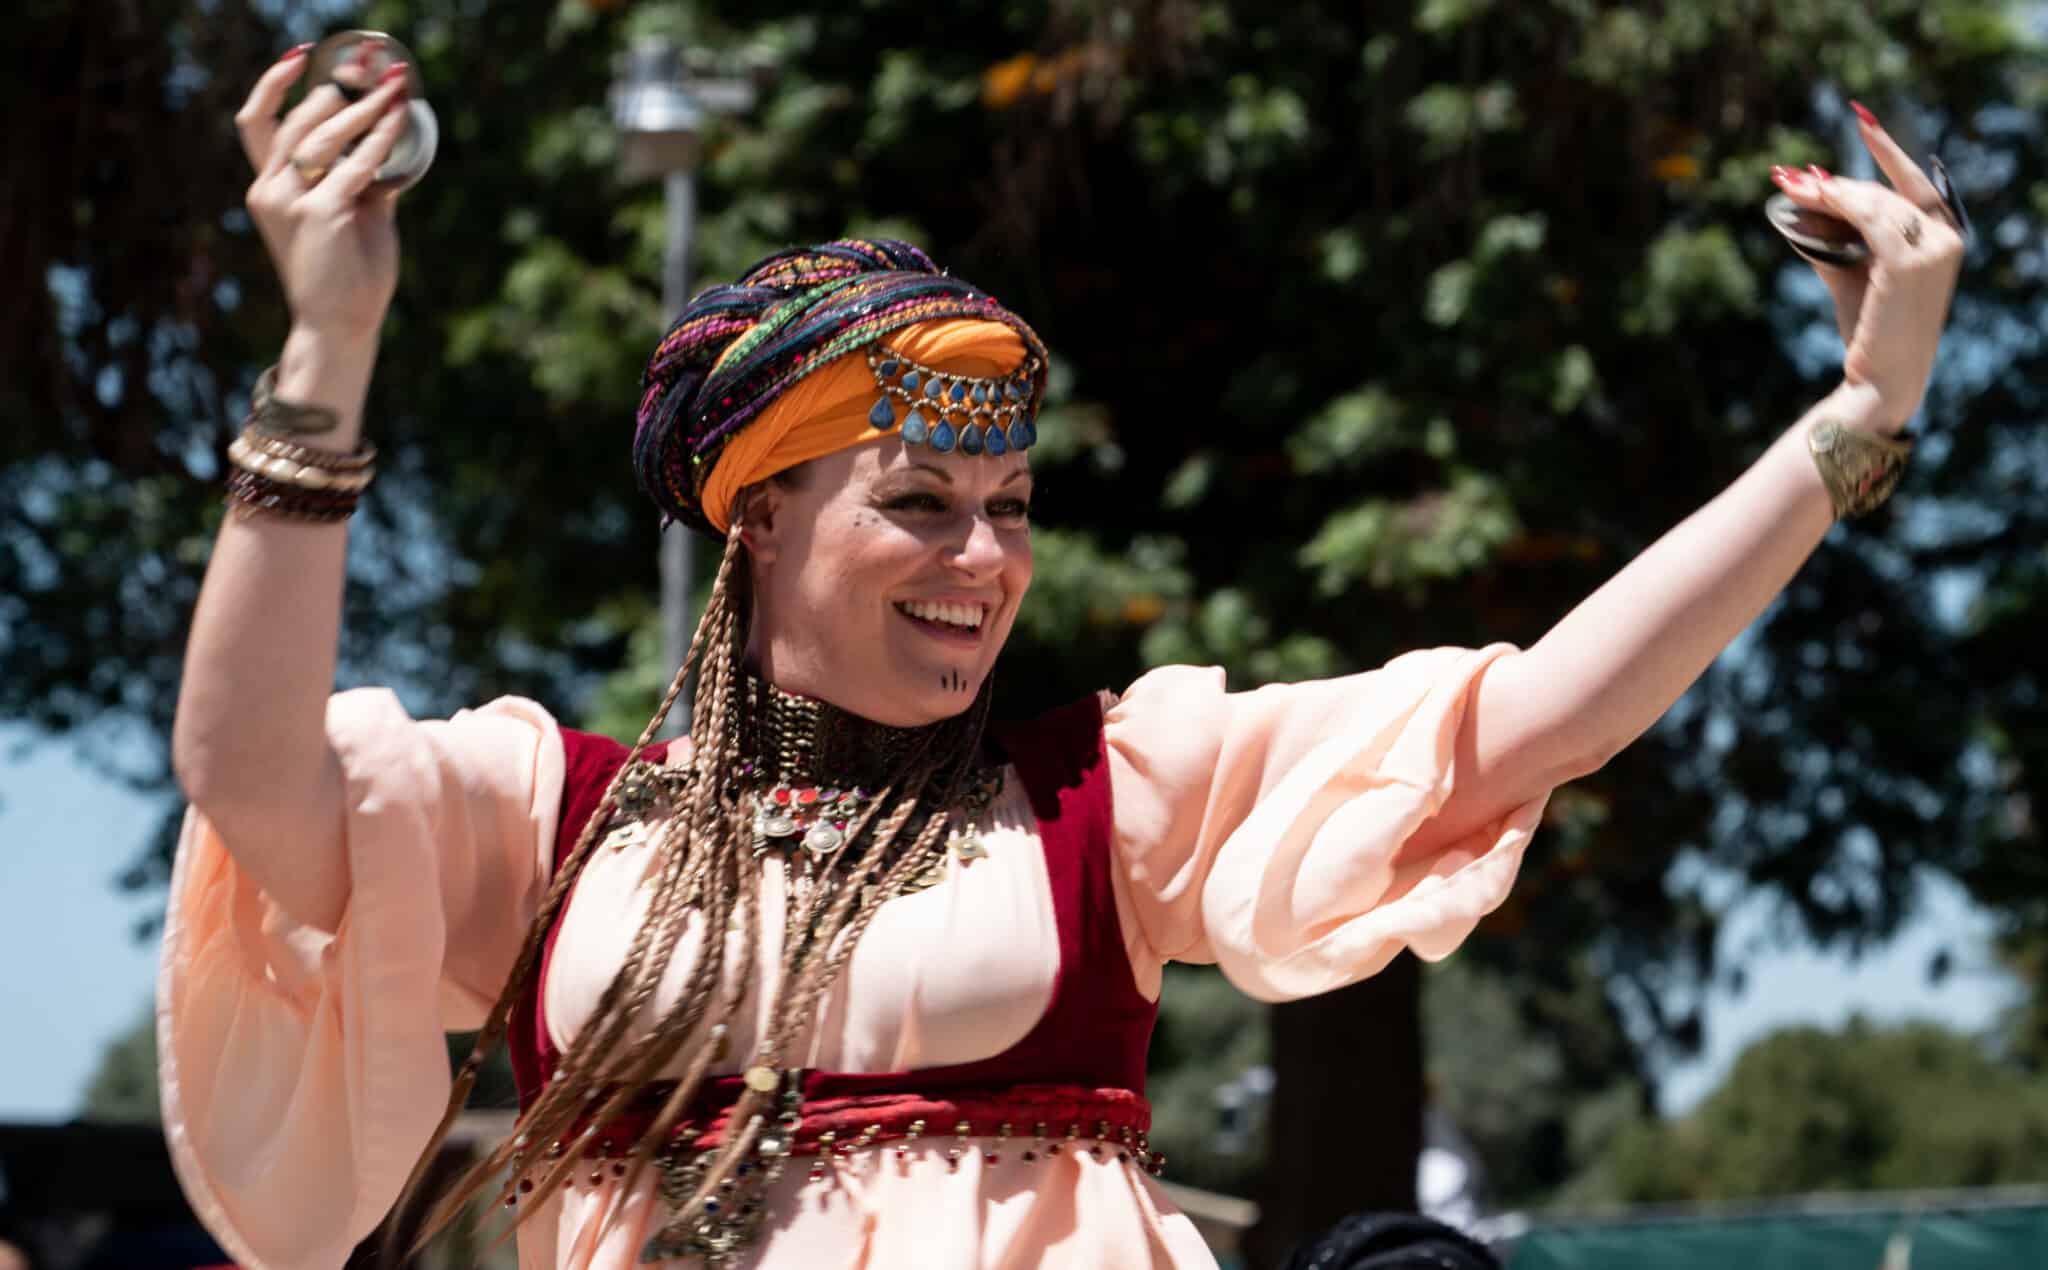 A belly dancer dances with finger cymbals at the Arkansas Renaissance Festival.